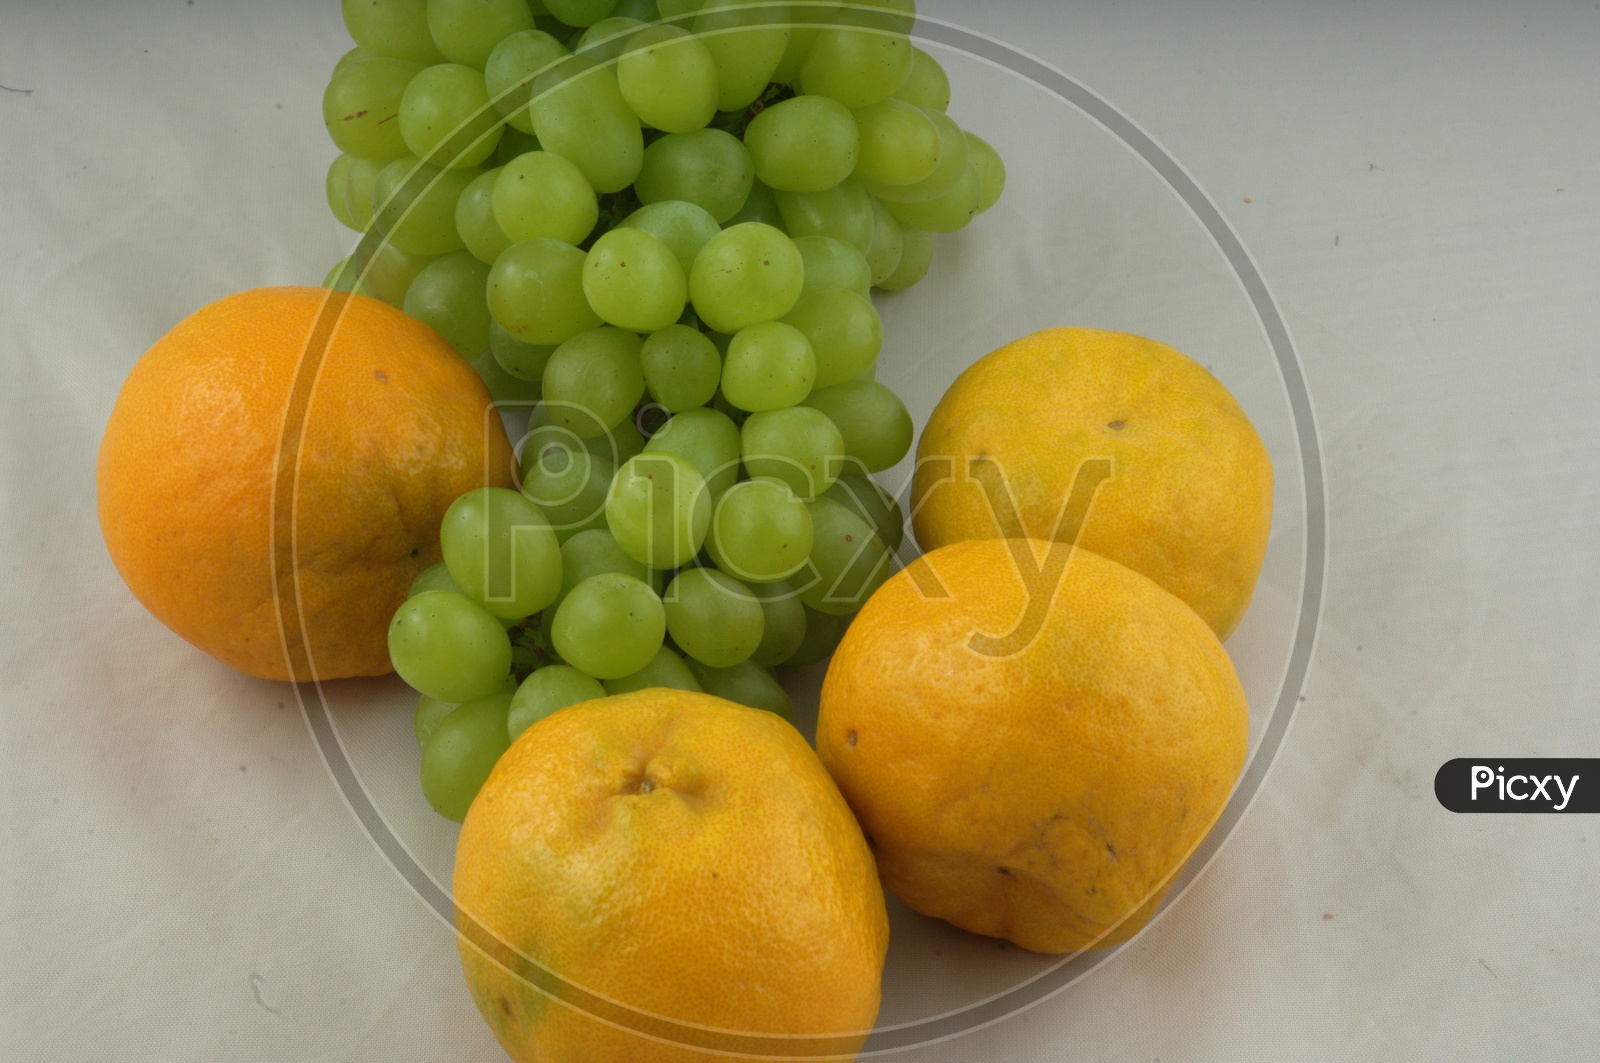 Citrus Fruit or Sweet Lemon and Grapes